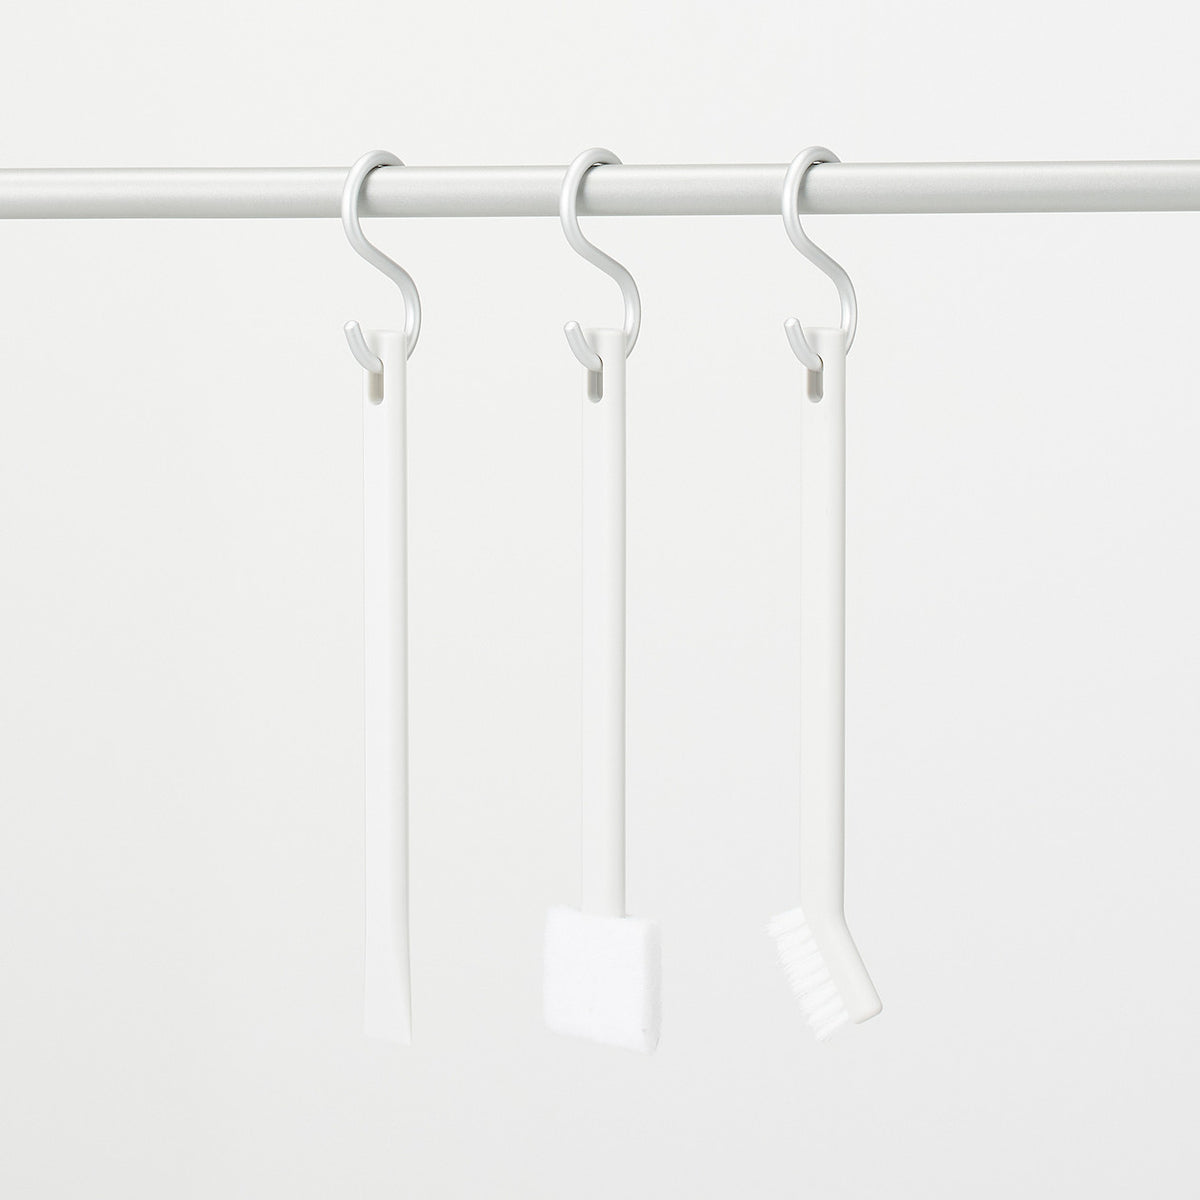 16 Pack 6 Inch White S Hooks for Hanging Clothes, Vinyl Coated Large S  Hooks for Closet, Non Slip Purse Hanger Bag Hooks Heavy Duty for Hanging  Clothes, Handbag, Jeans, Belts, Towels